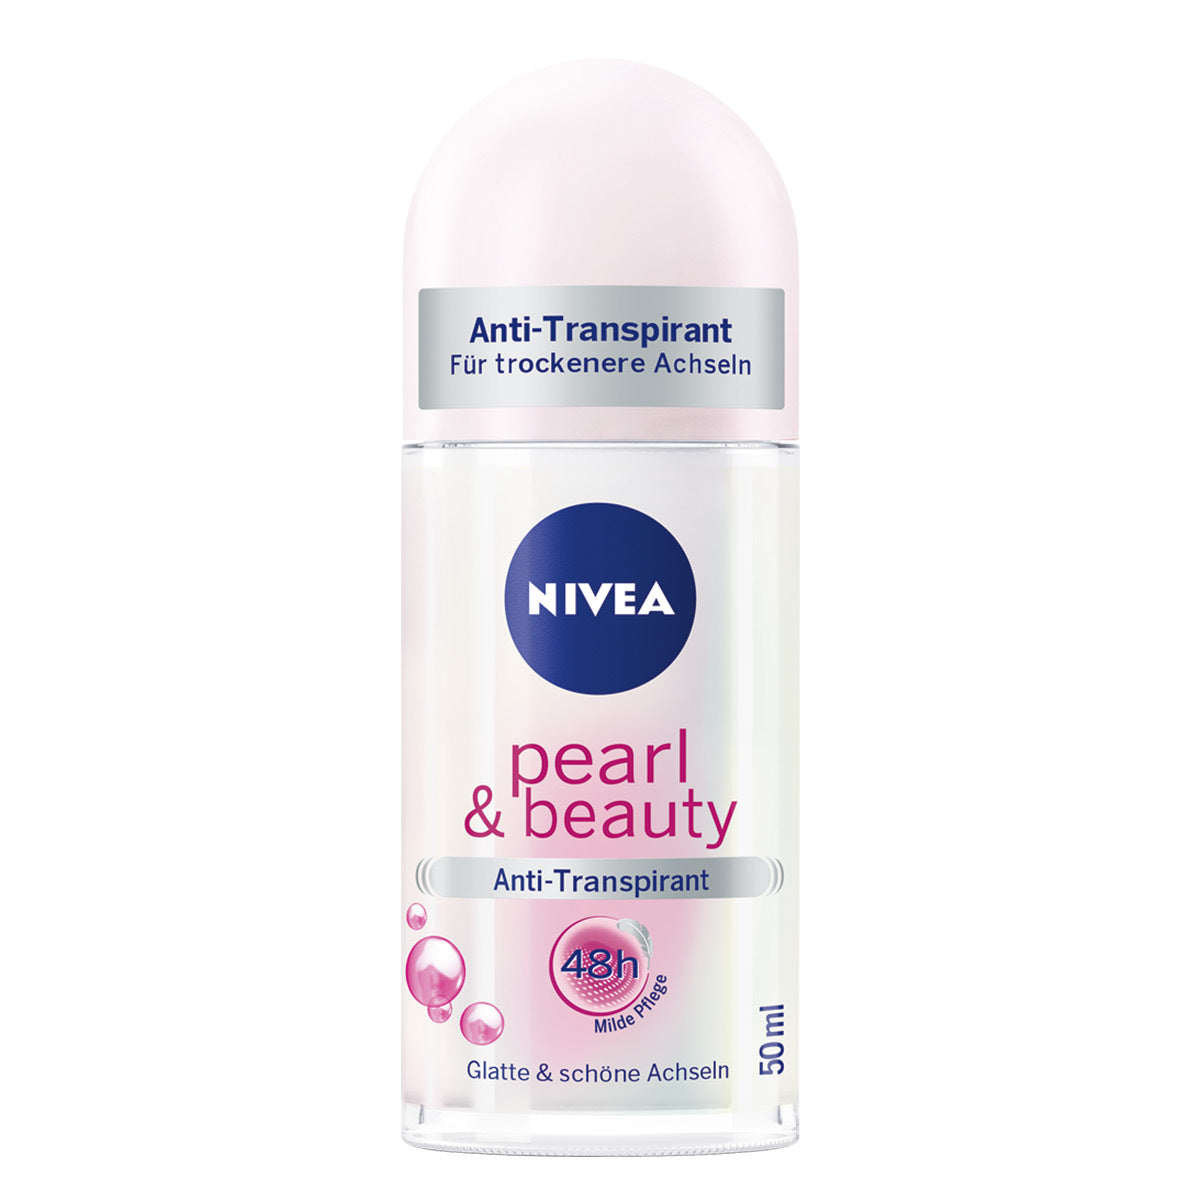 Primary image of Nivea Pearl & Beauty Roll On Deodorant